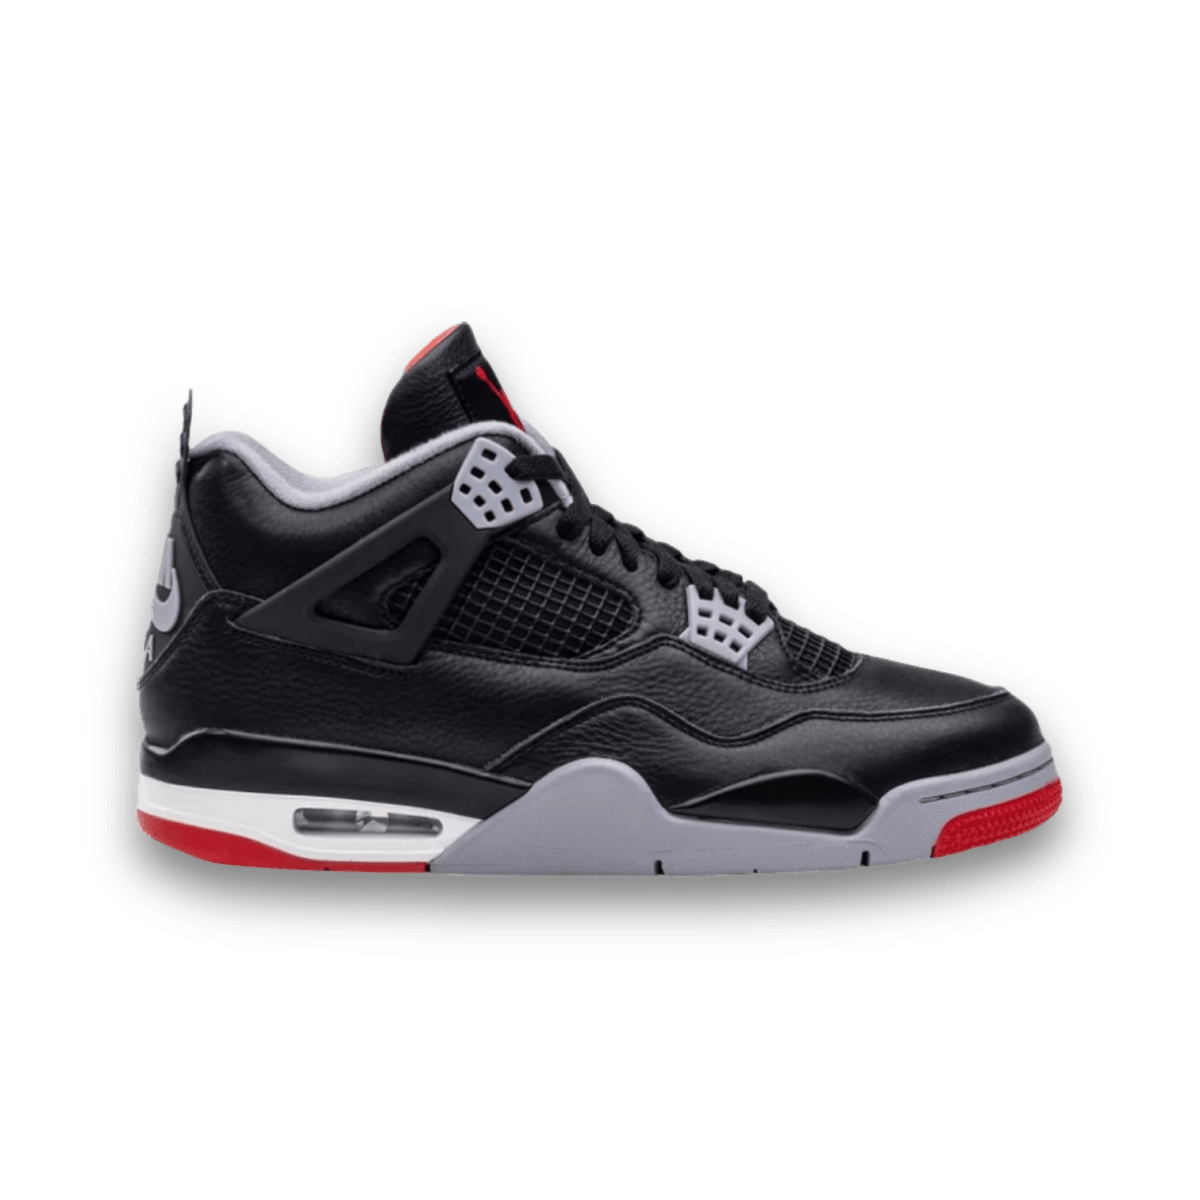 Air Jordan 4 Retro 'Bred Reimagined' - Mid Sneaker - Jawns on Fire Sneakers & Streetwear